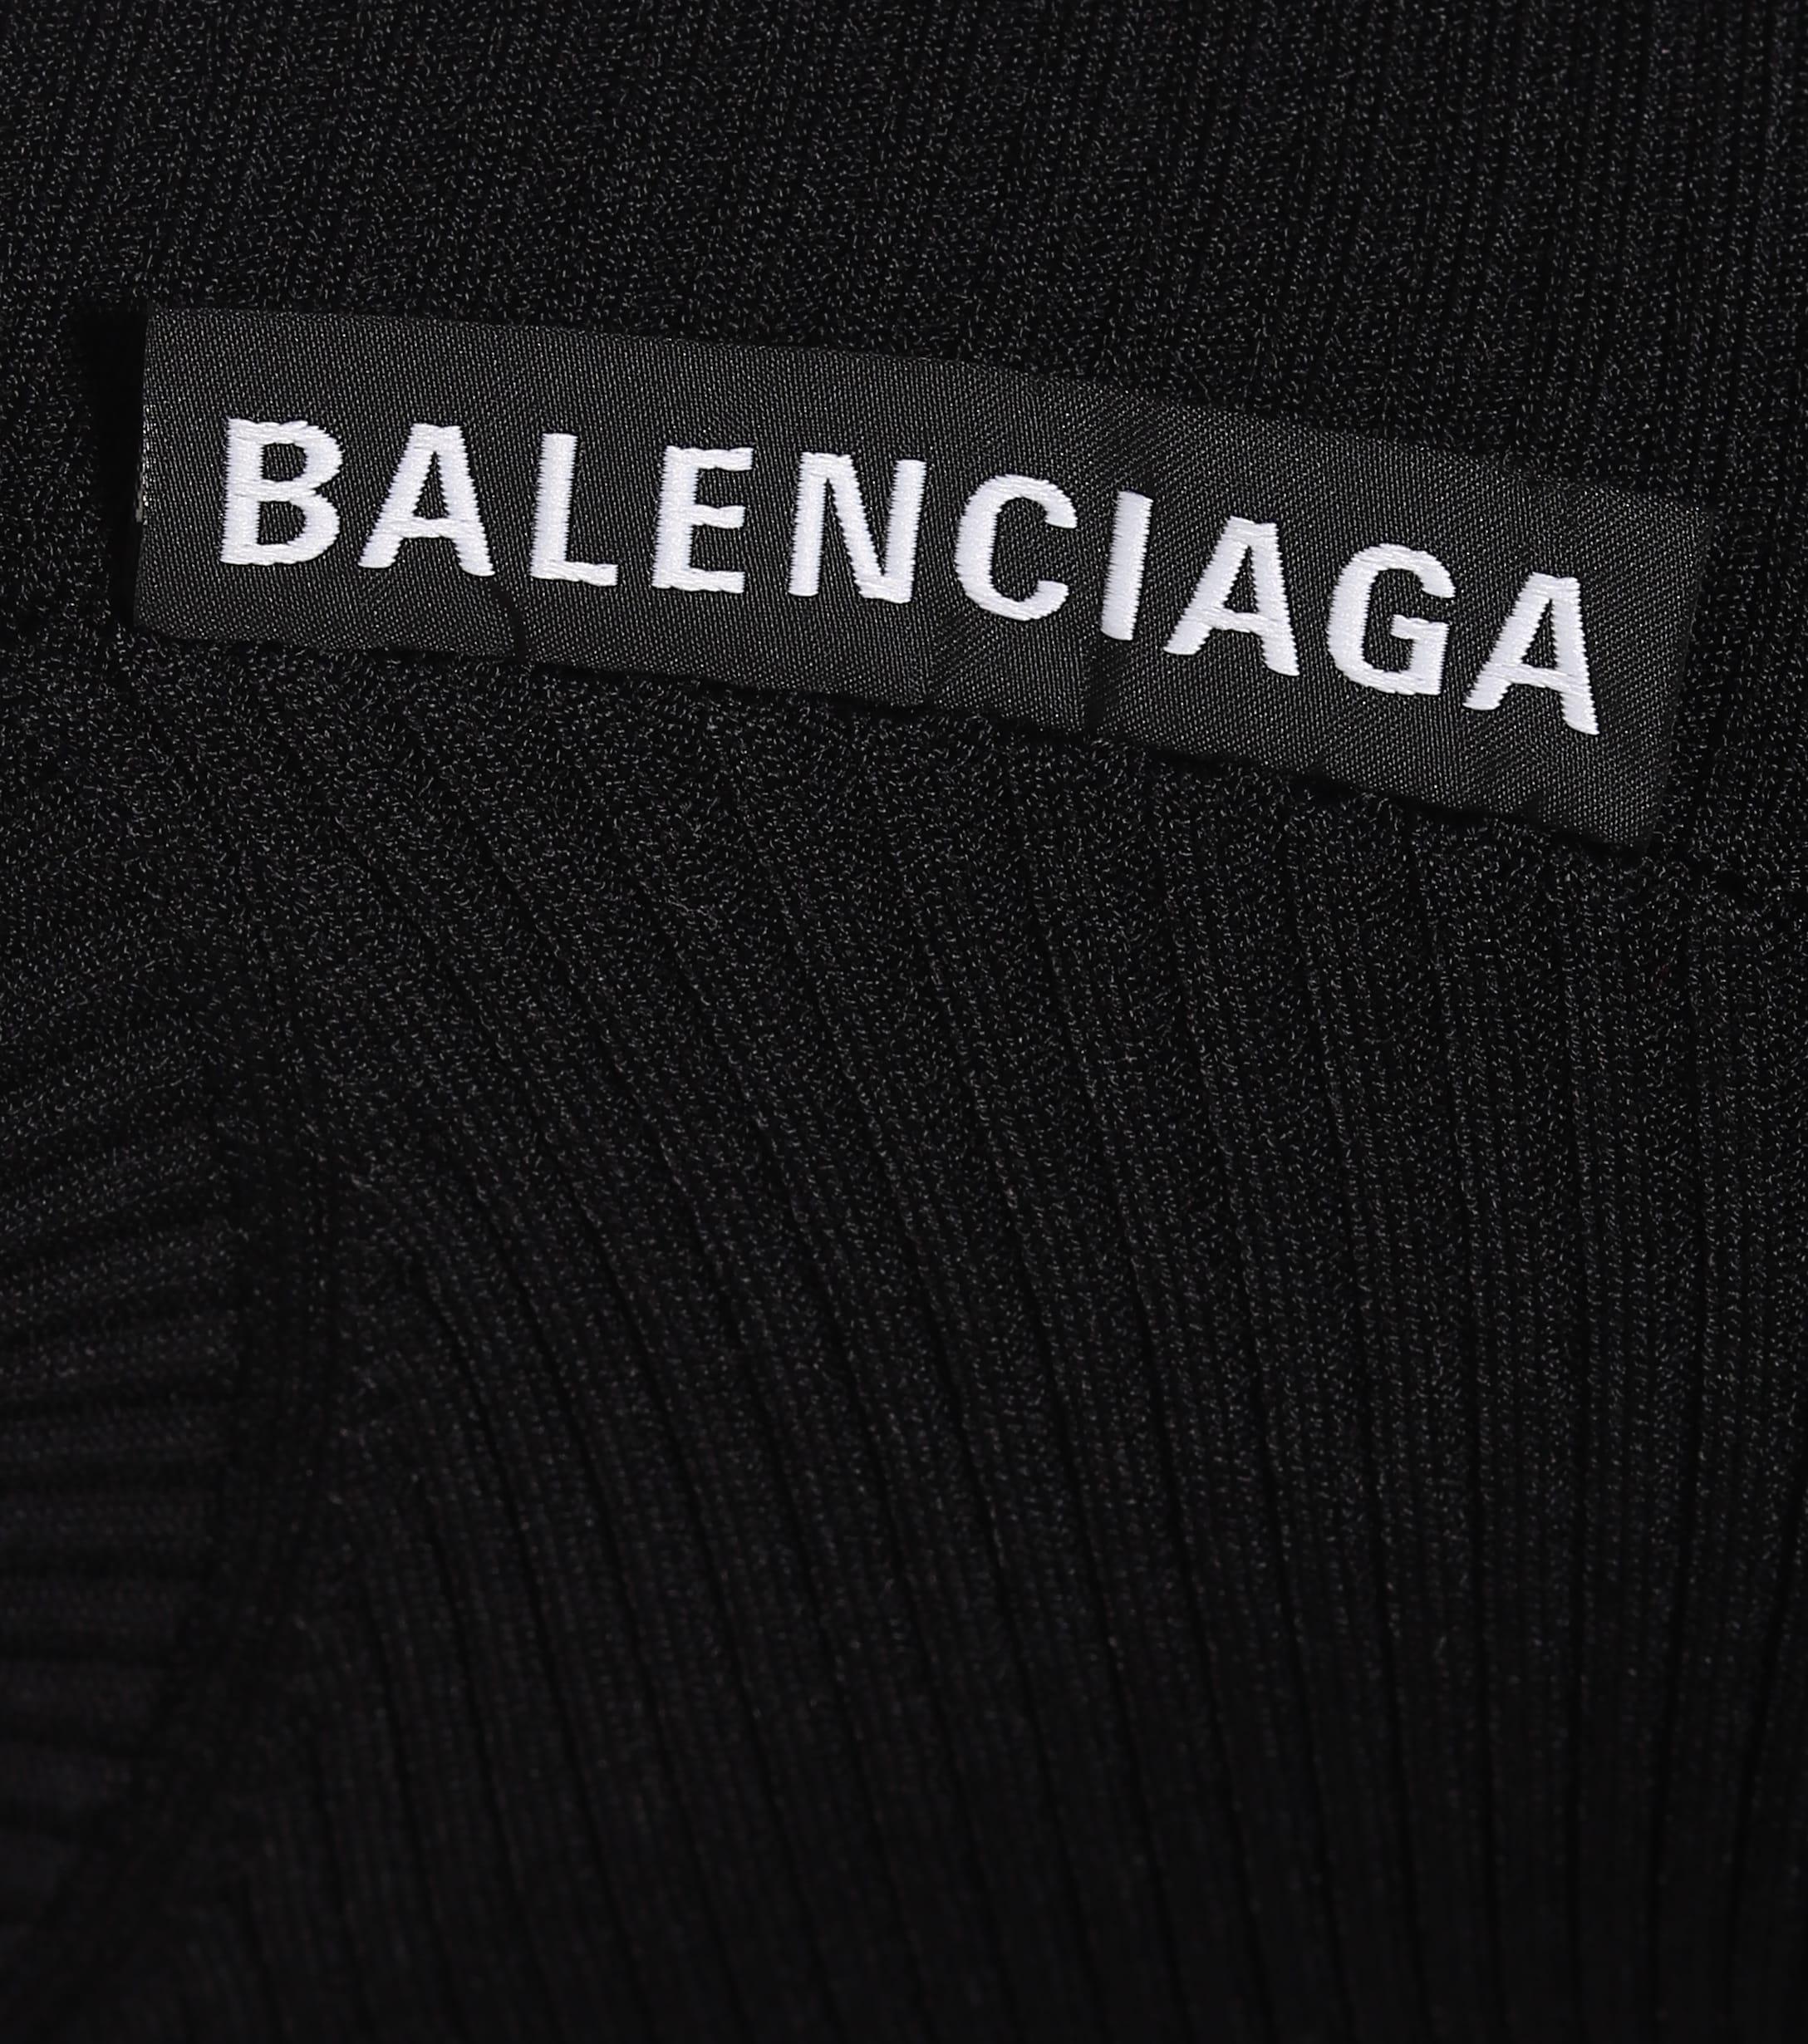 Balenciaga Ribbed-knit Top in Black - Lyst